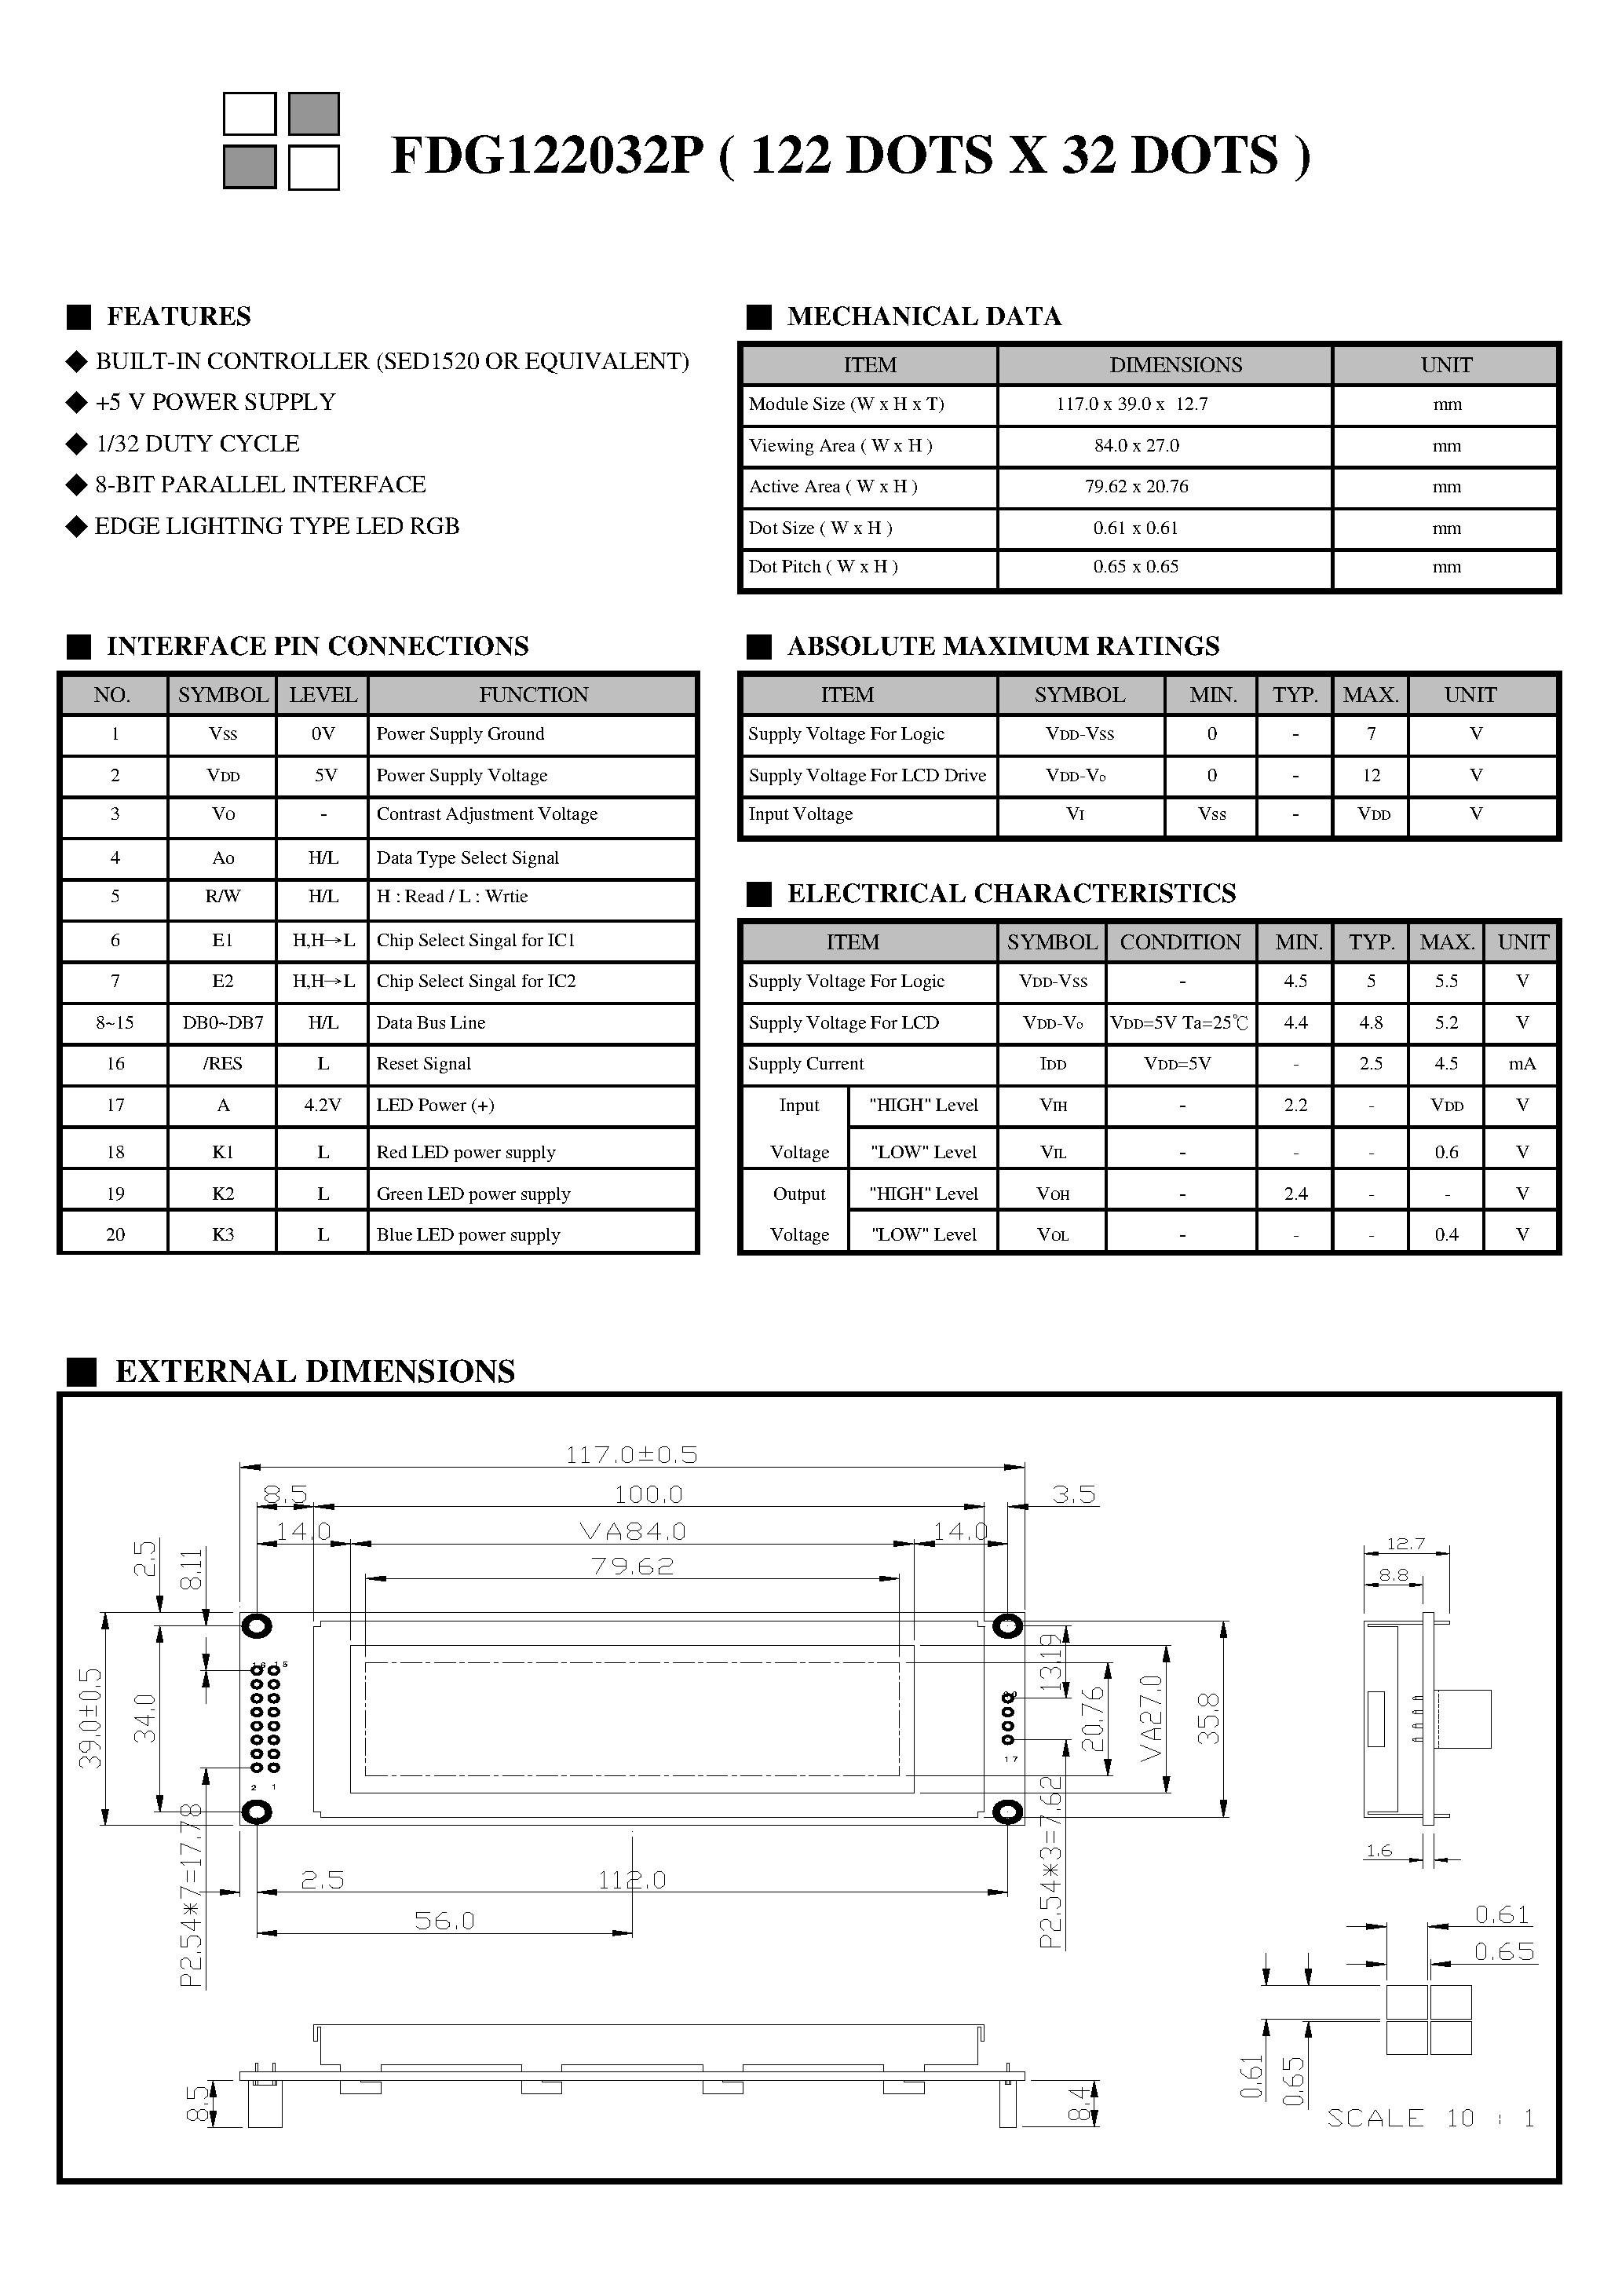 Datasheet FDG122032P - Monochrome Lcd Module page 2